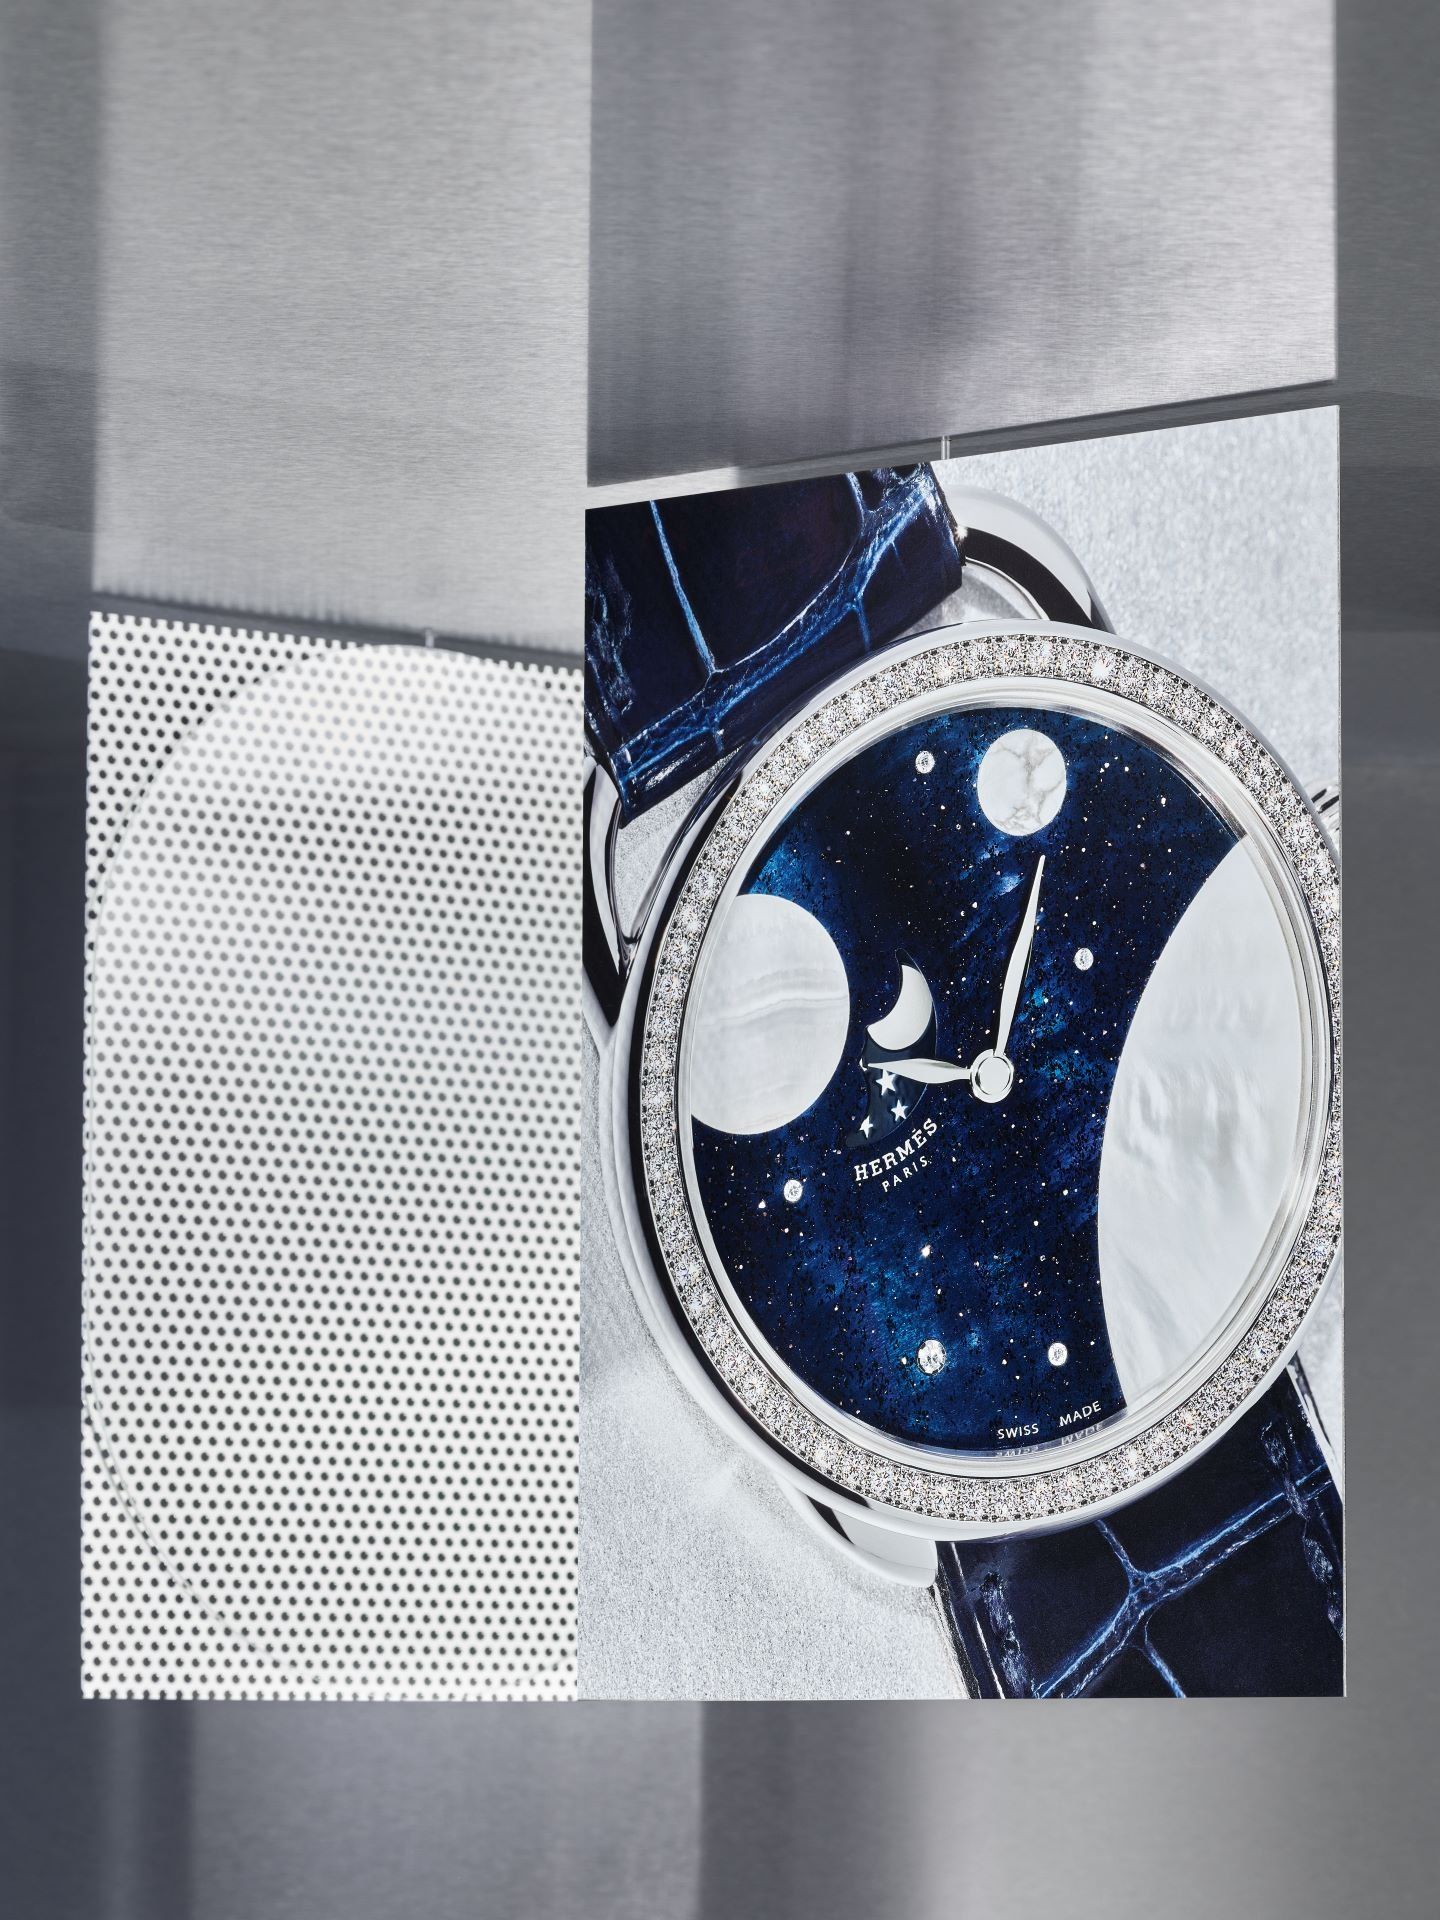 The Arceau Petite Lune features the Manufacture Hermès H1837 caliber